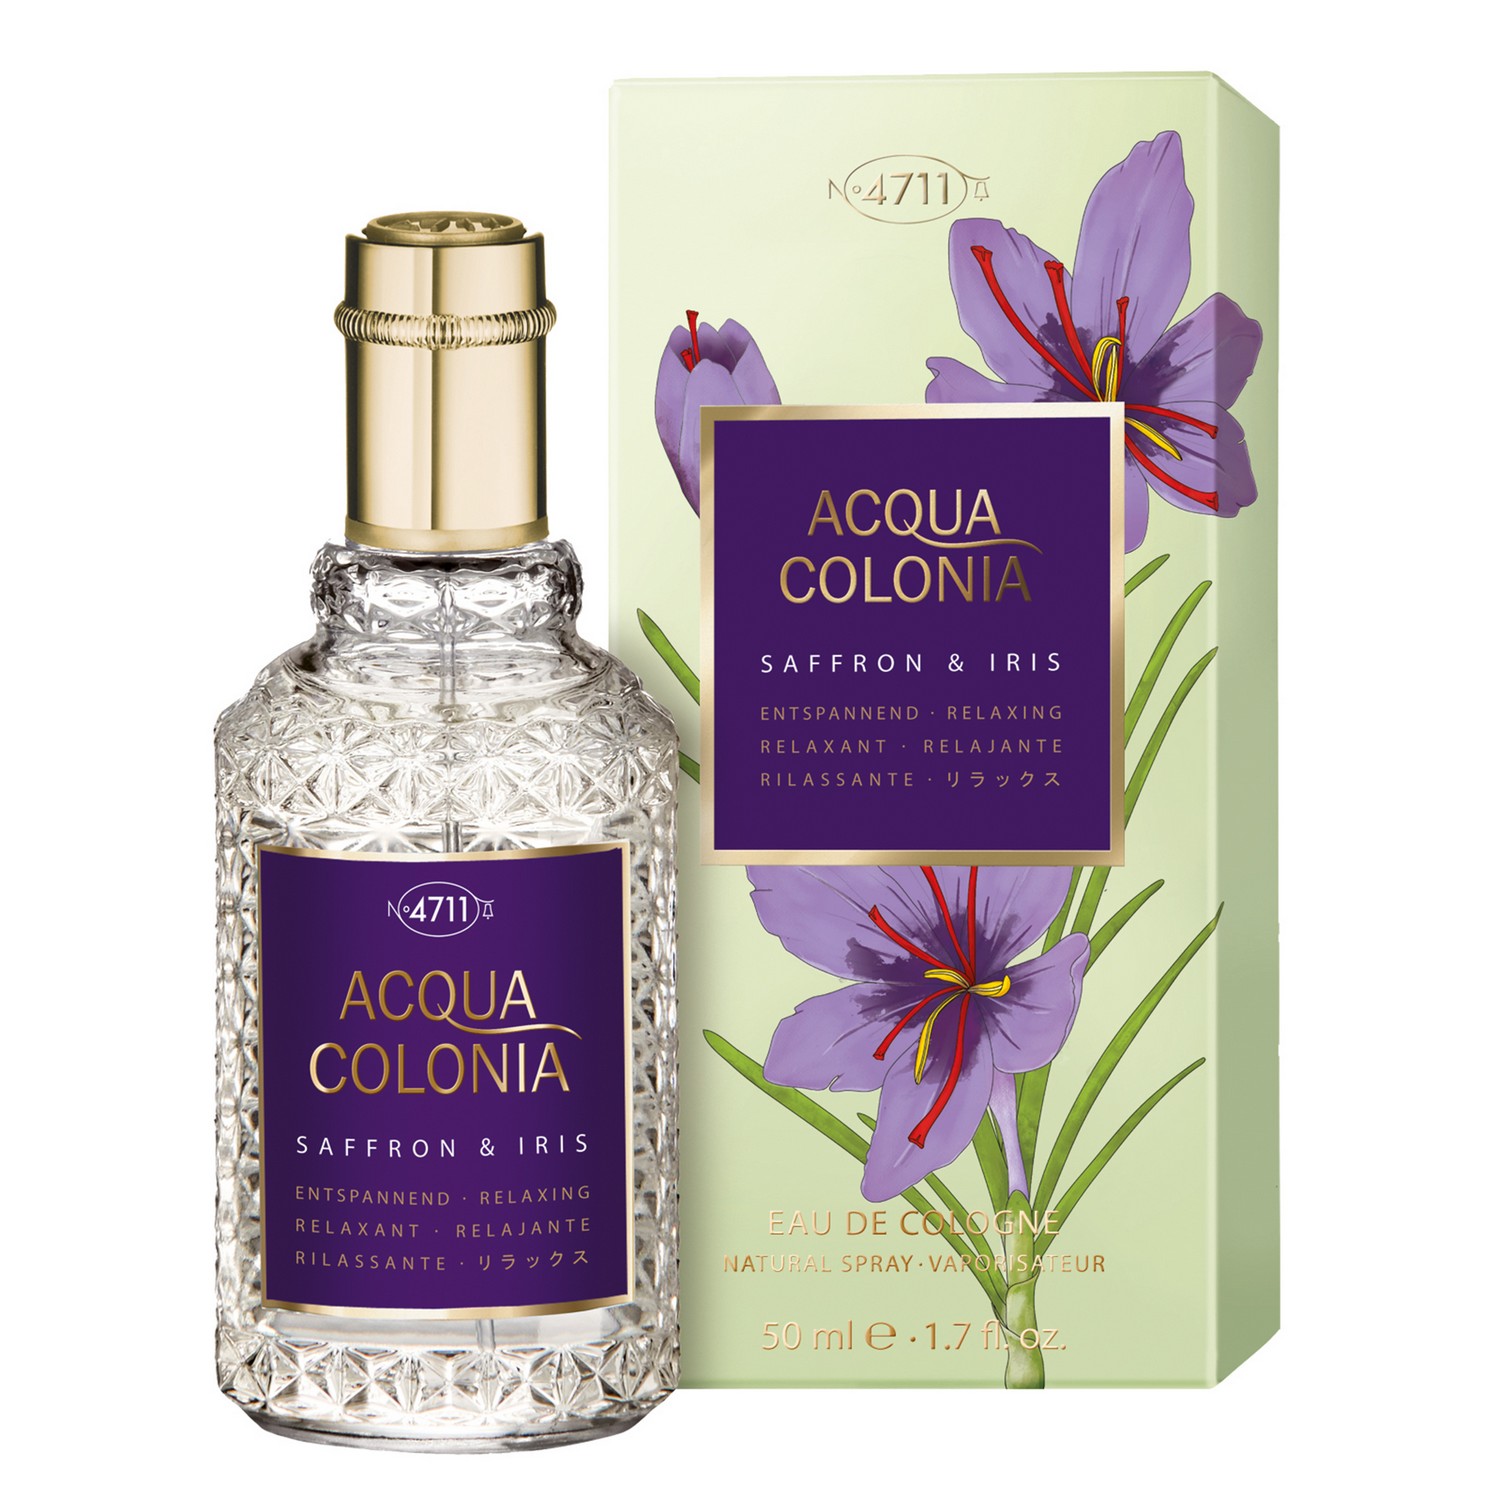 4711 Acqua Colonia Saffron & Iris Eau de Cologne 170ml